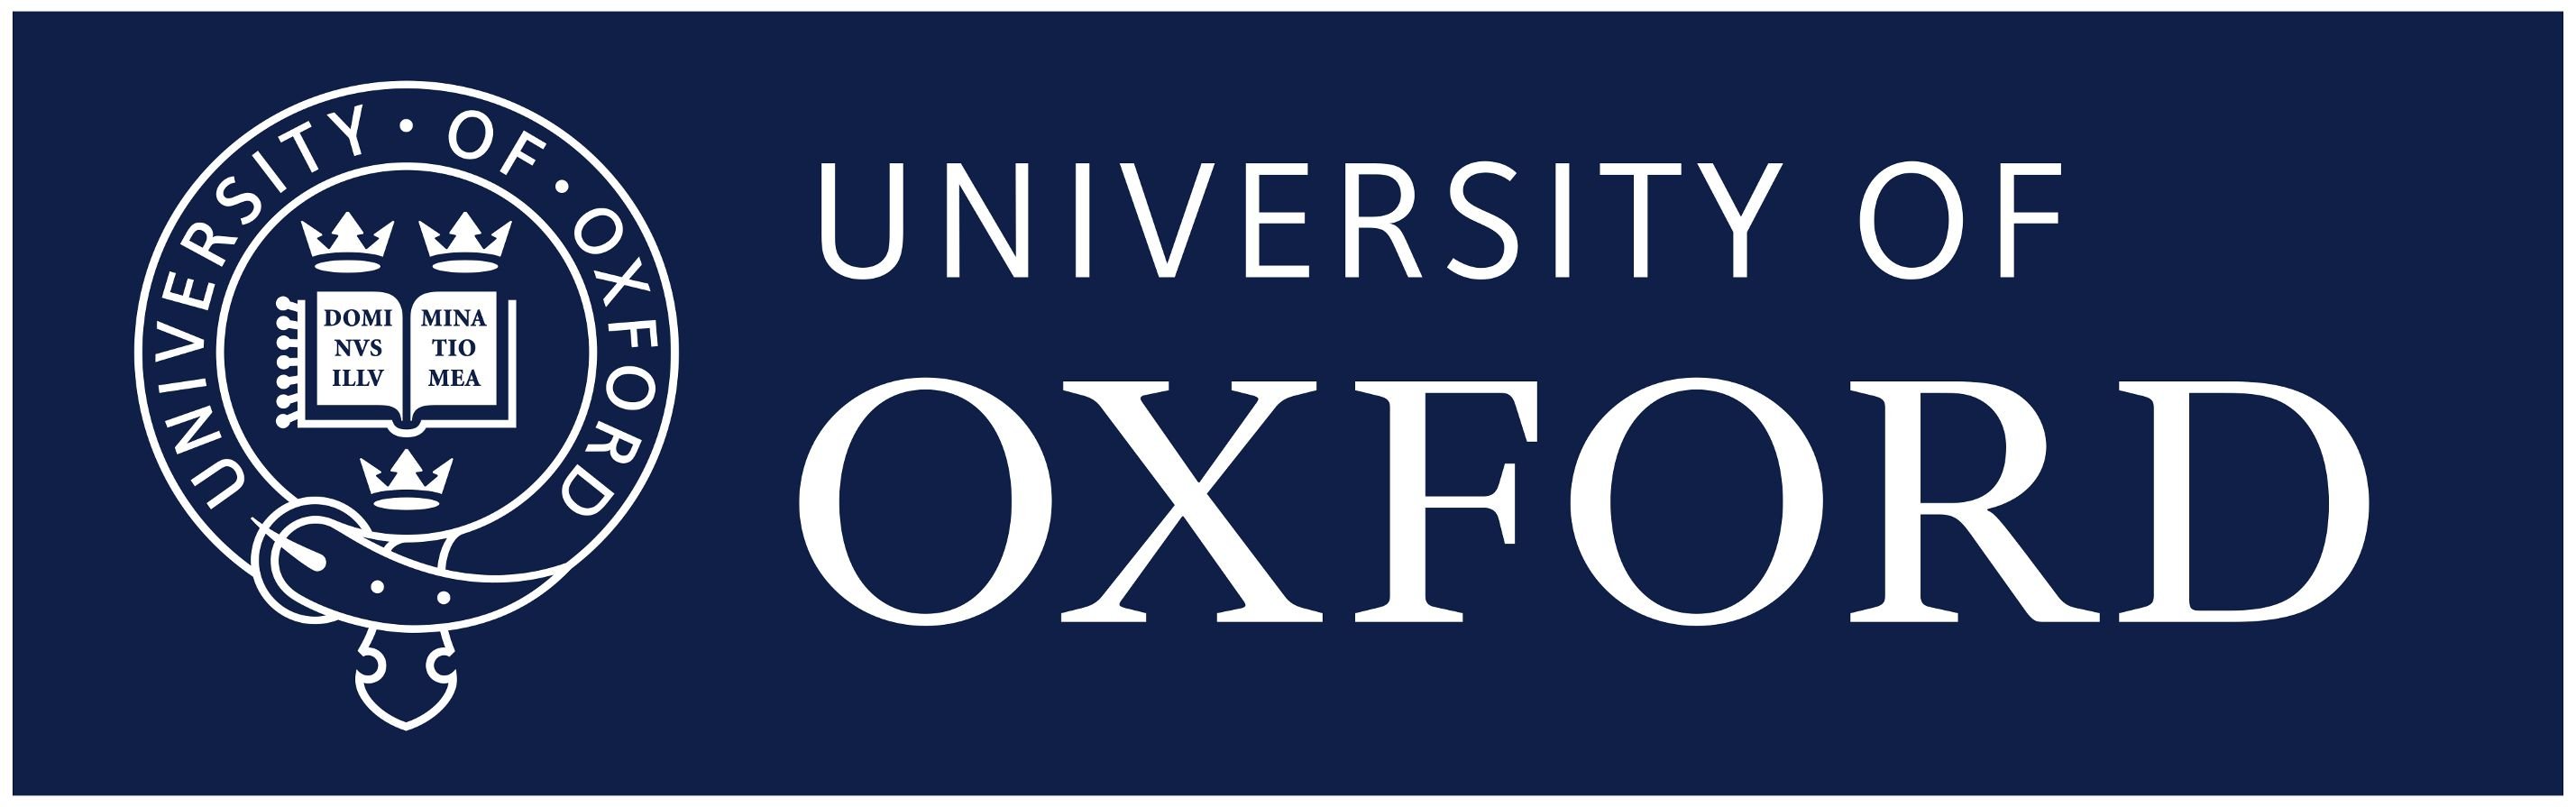 University of oxford logo